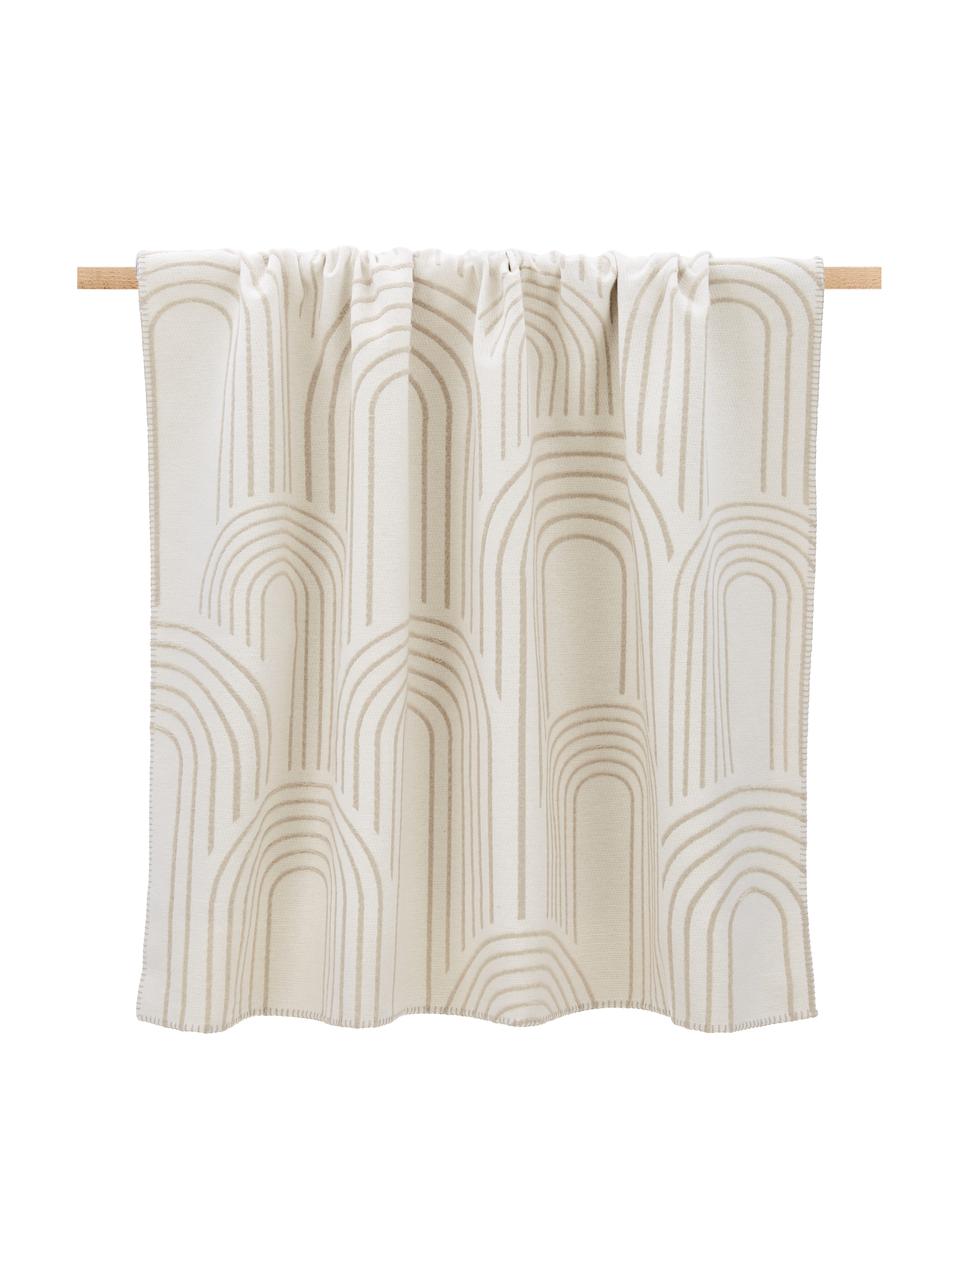 Omkeerbare plaid Deco met reliëf design en decoratieve stiksels, 85% katoen, 15% polyacryl, Crèmekleurig, beige, 130 x 200 cm